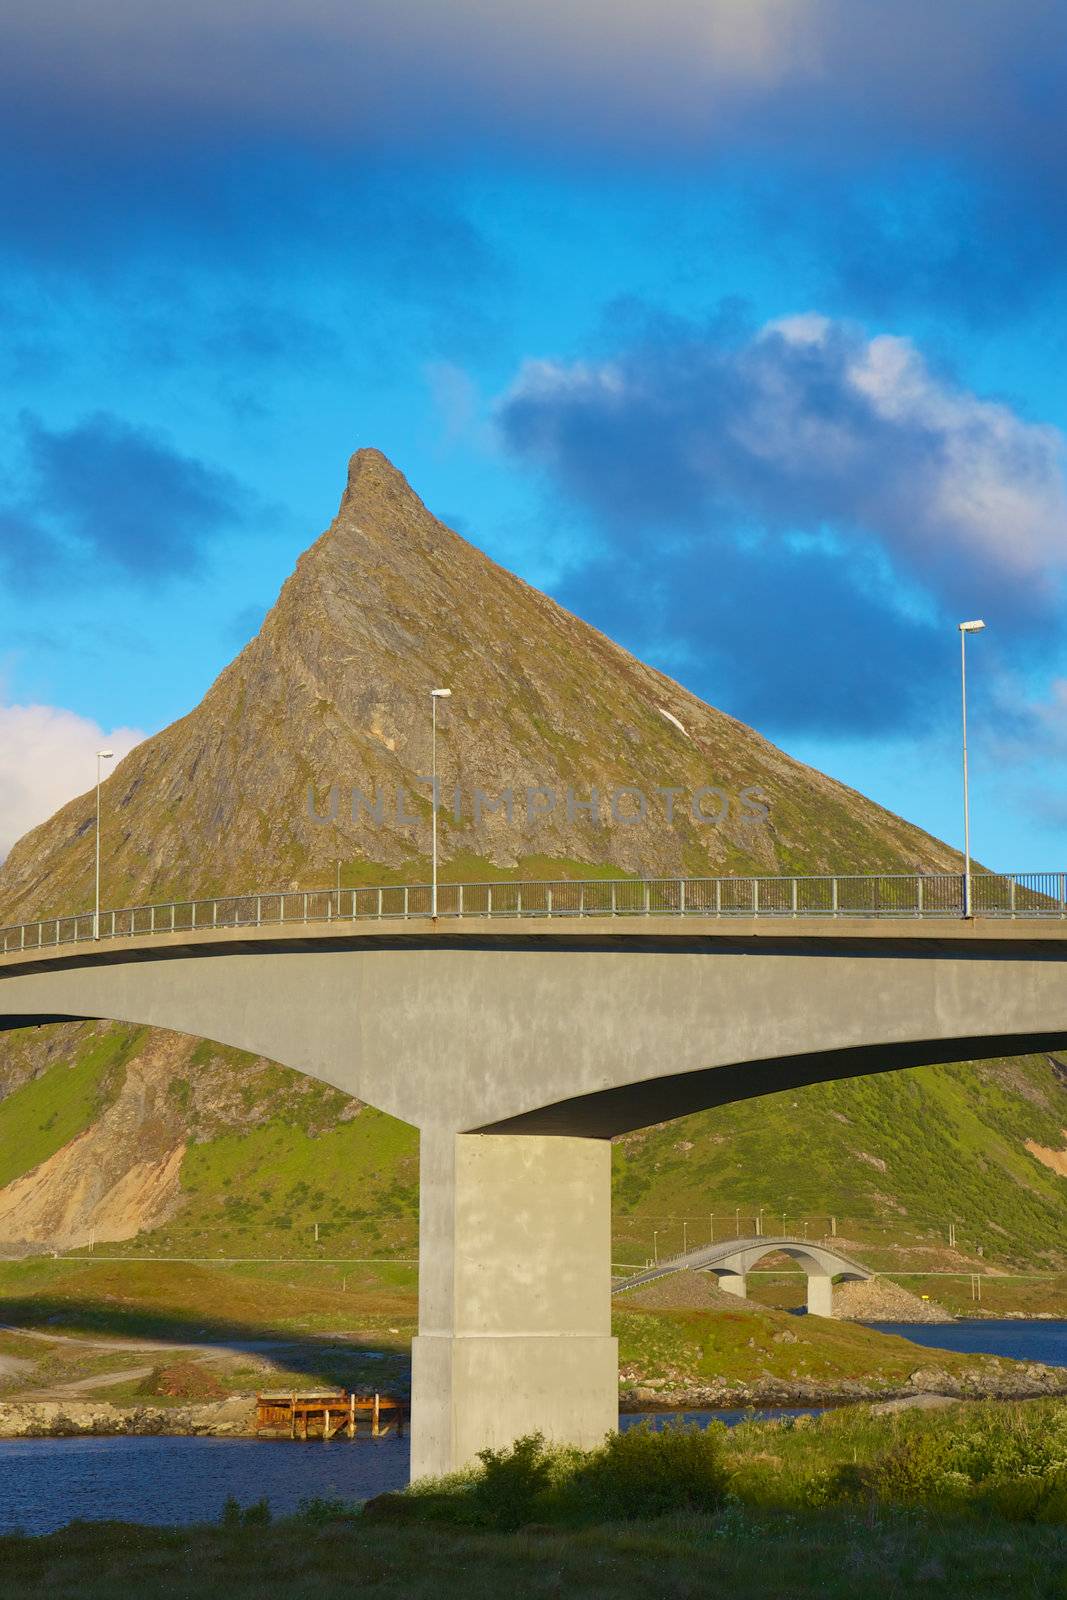 Norwegian bridges by Harvepino